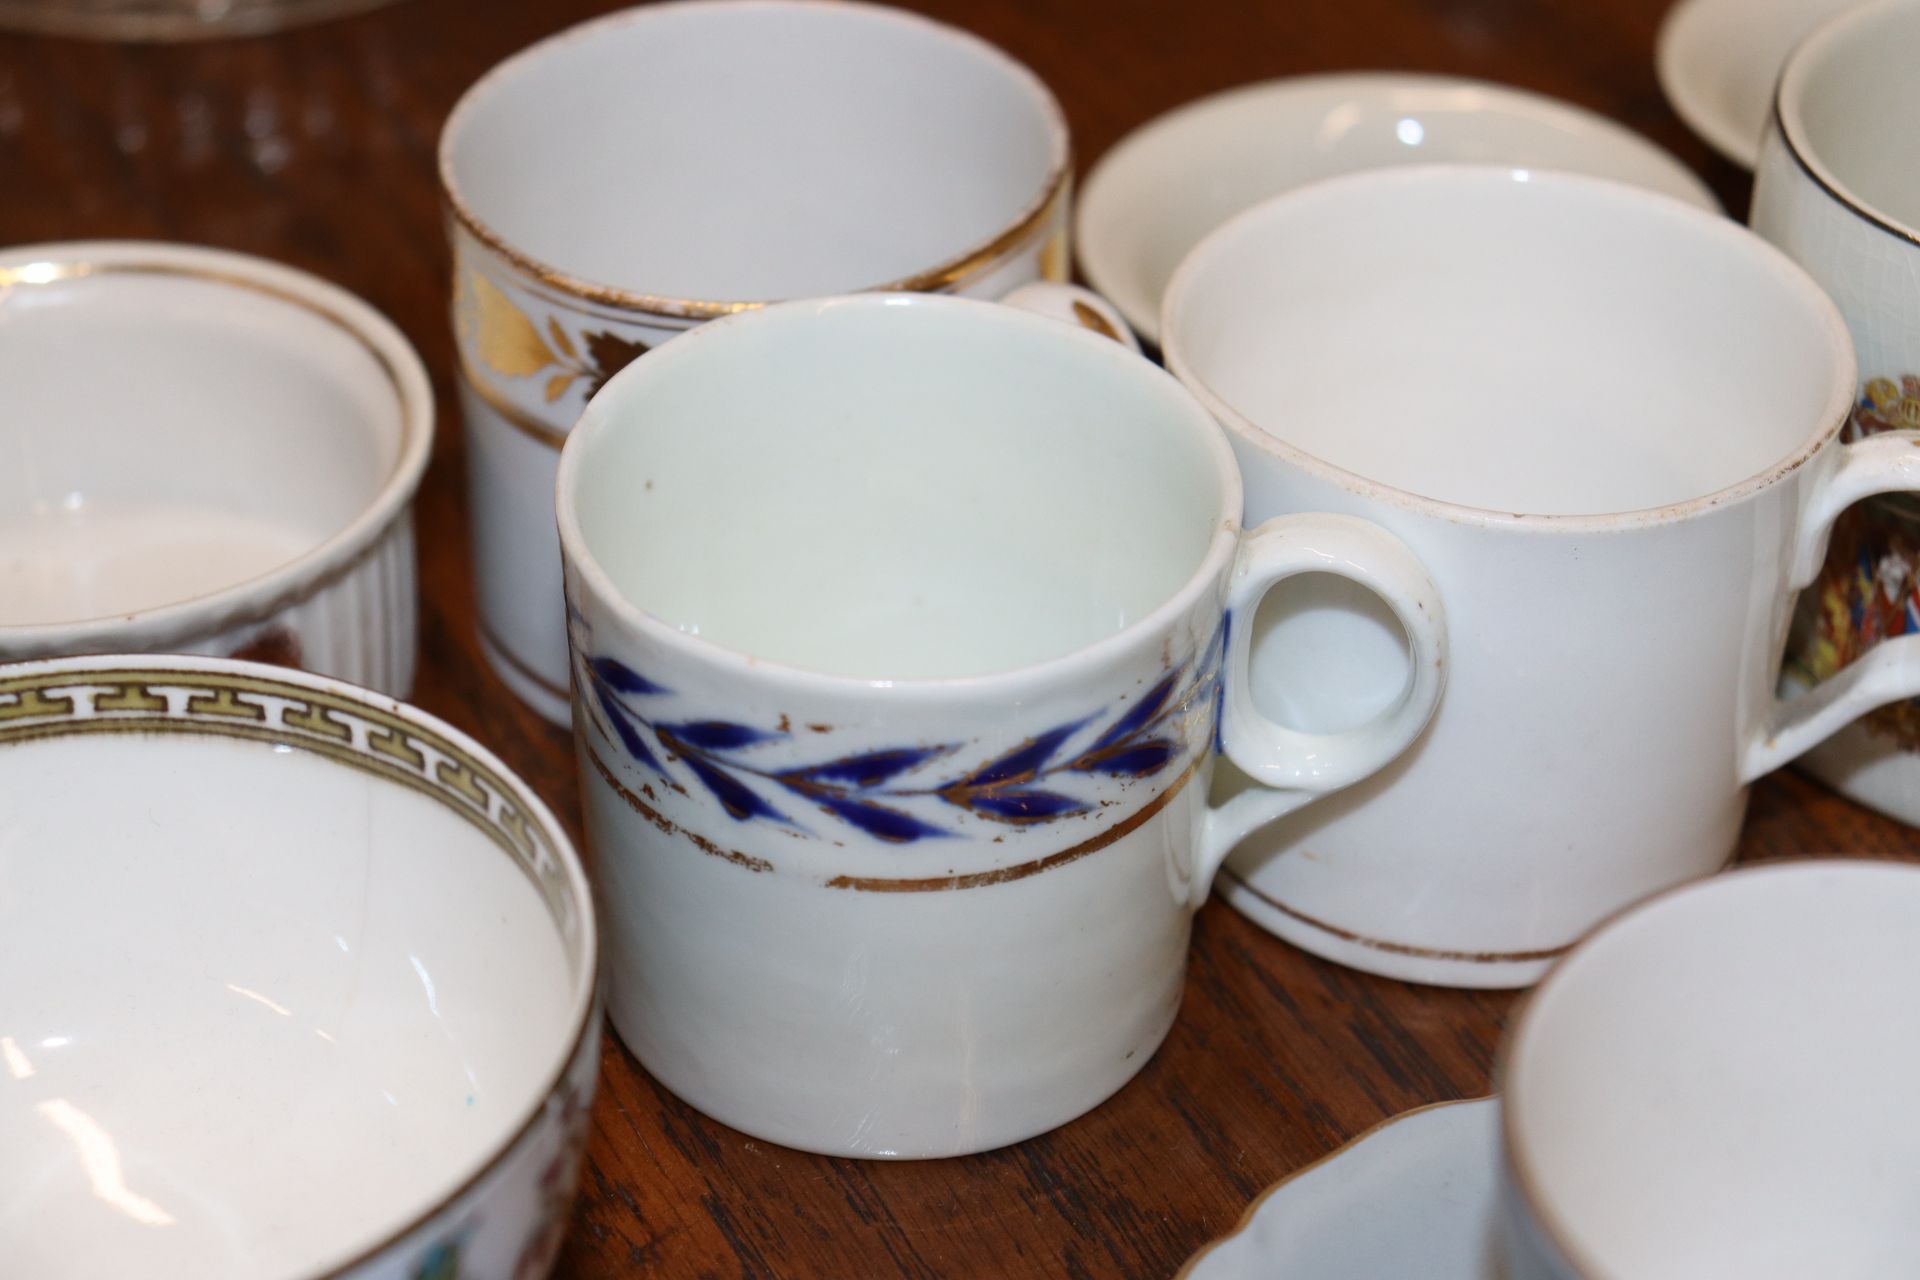 A quantity of various decorative china and tea war - Image 6 of 9